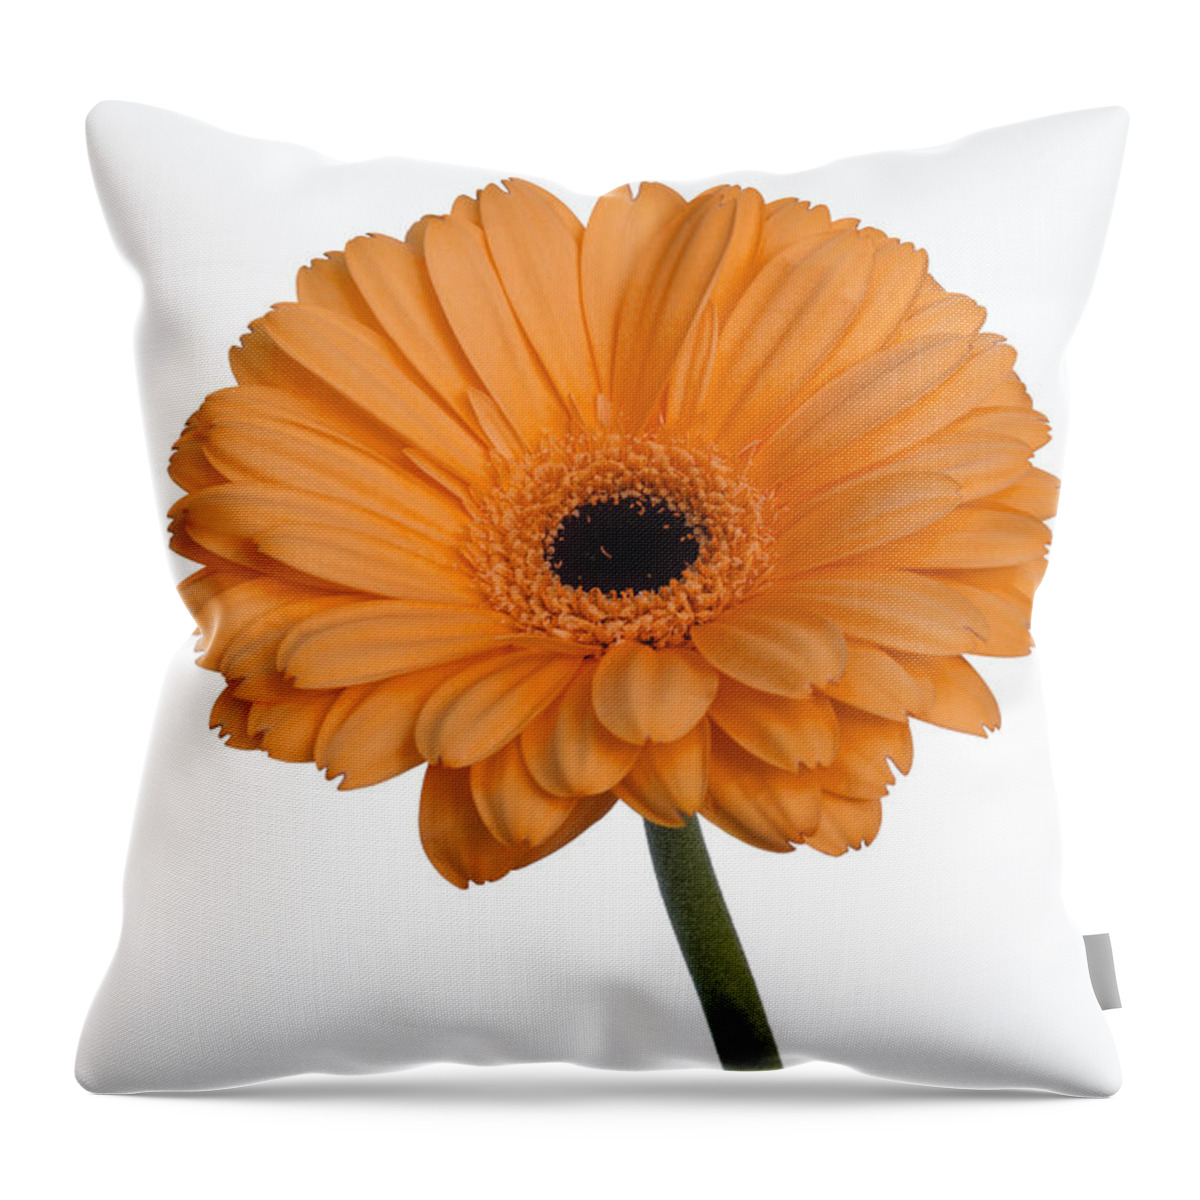 Flowers Throw Pillow featuring the photograph Orange Gerbera Daisy by Wild Sage Studio Karen Powers